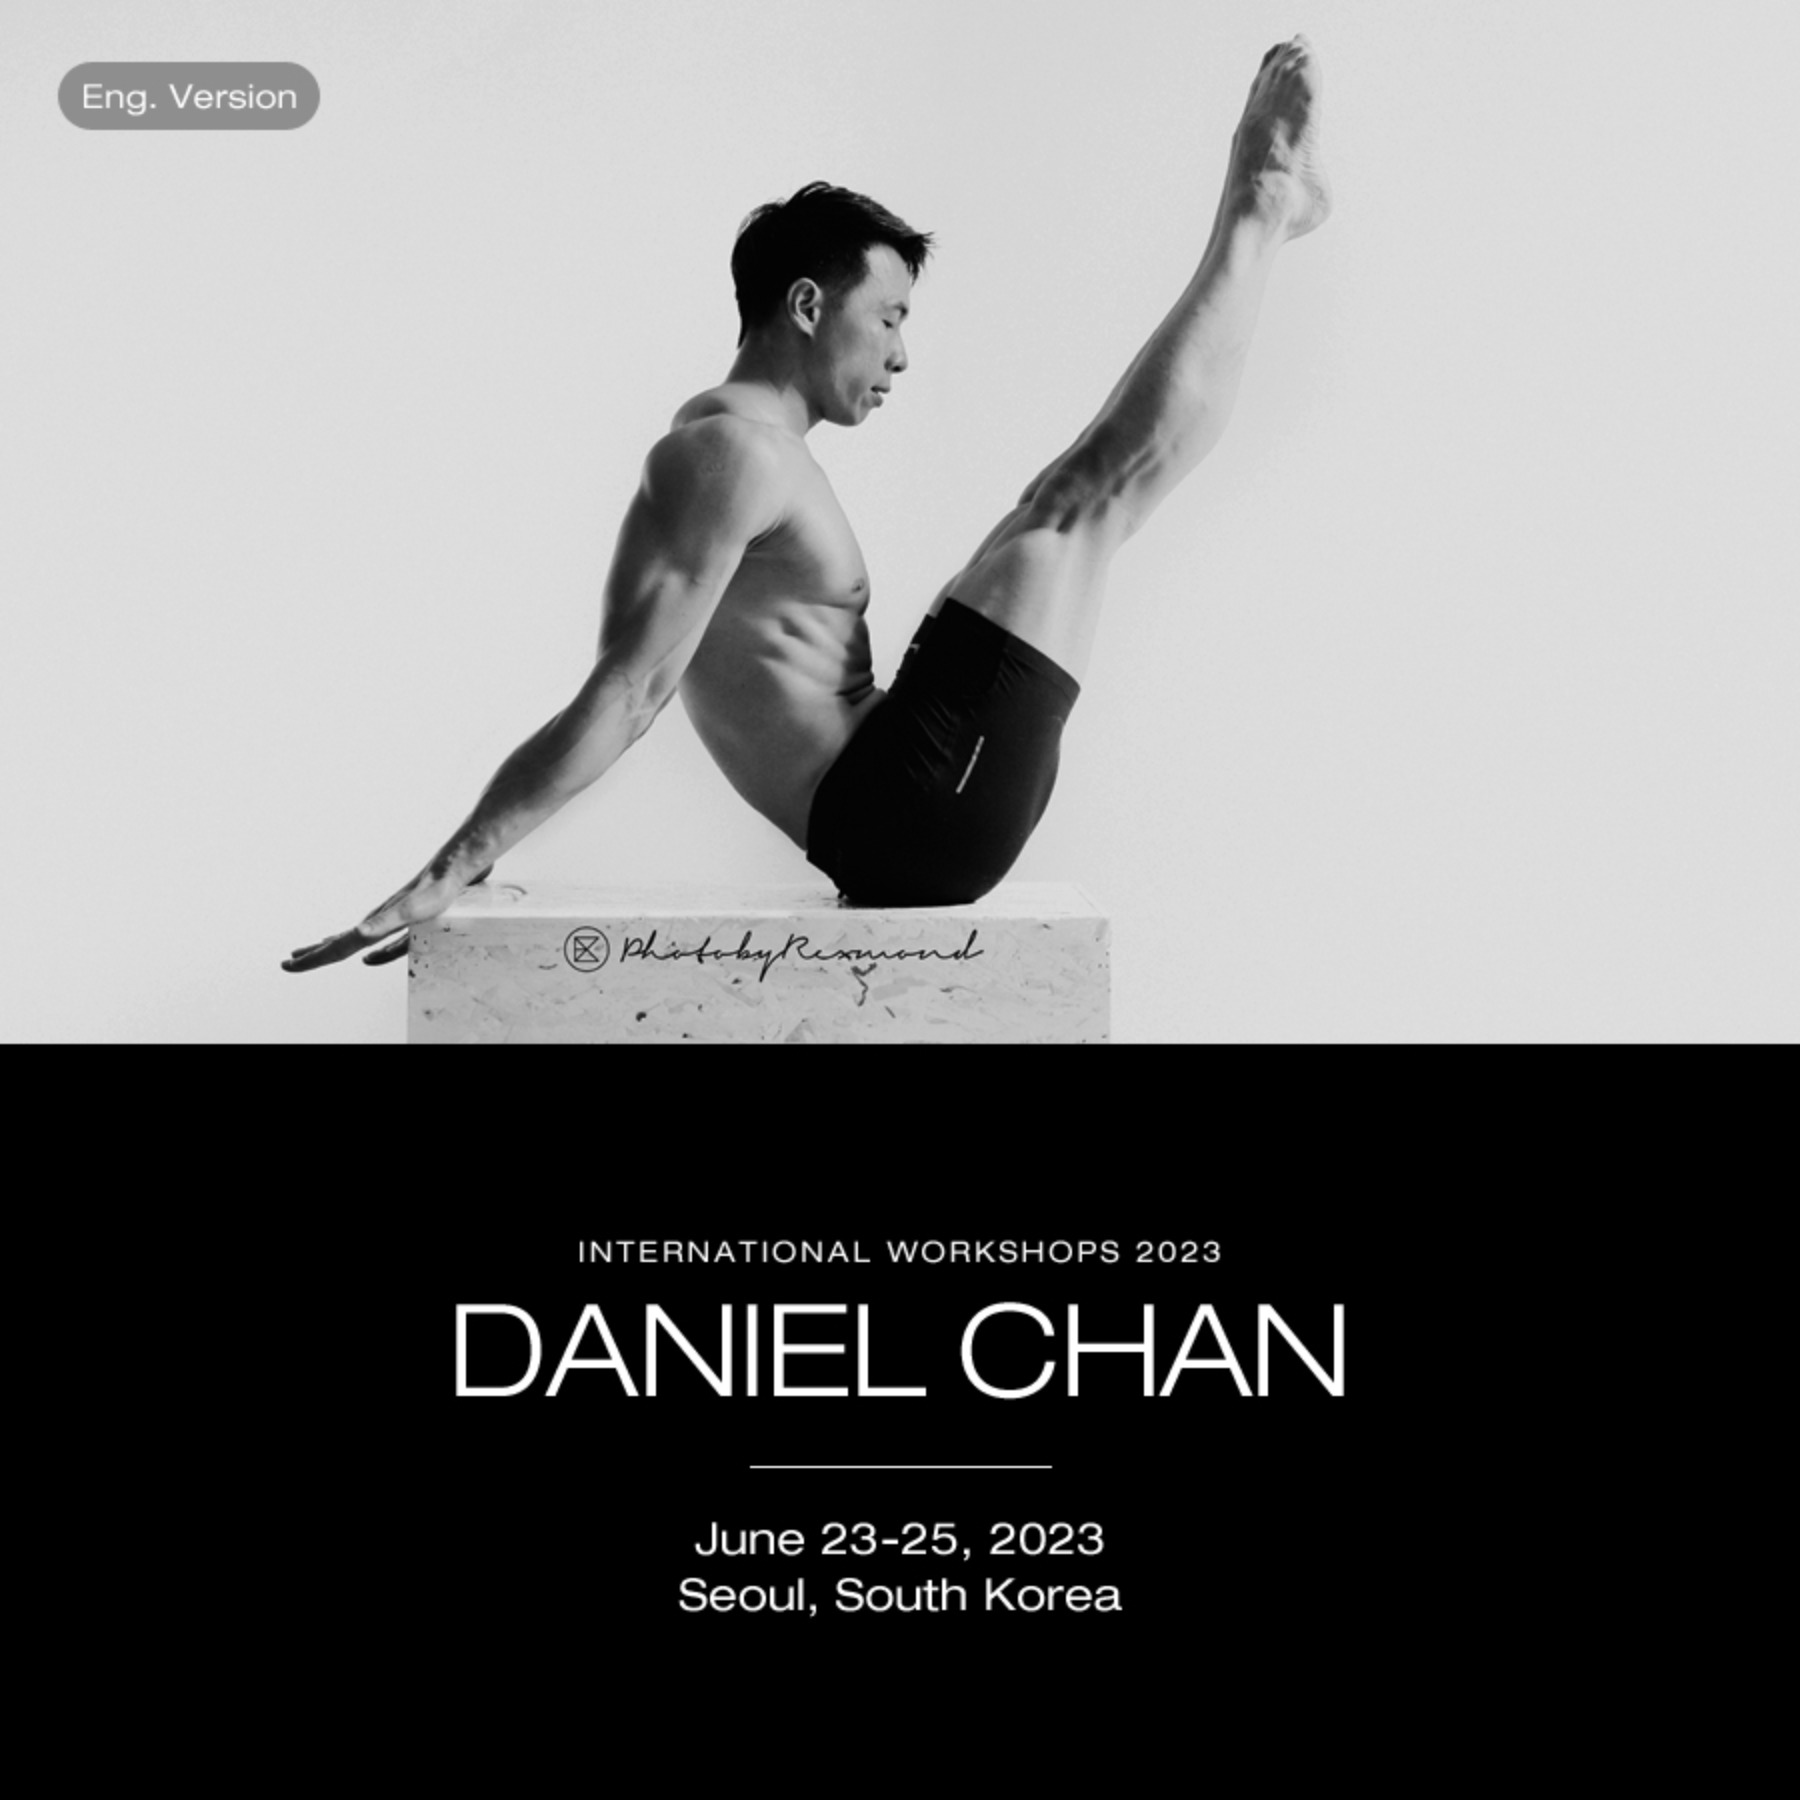 Rehabilitation Pilates Workshop 2023 by Daniel Chan